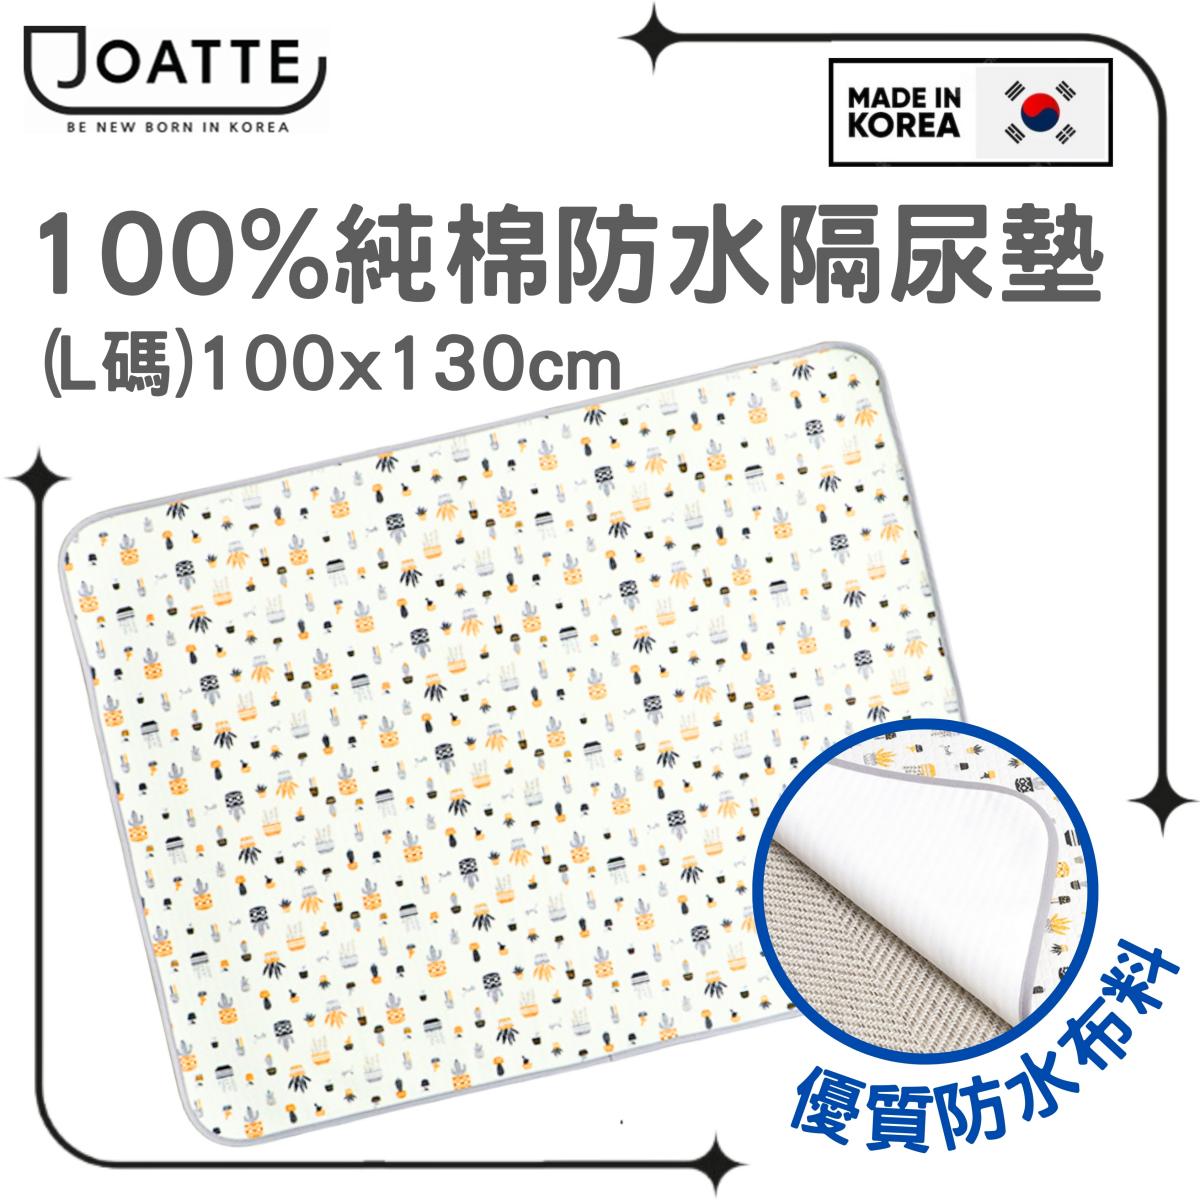 100% Pure Cotton Waterproof Mat Urine pad No Fluorescent Agent (L Size: 100 x 130cm) - MIR